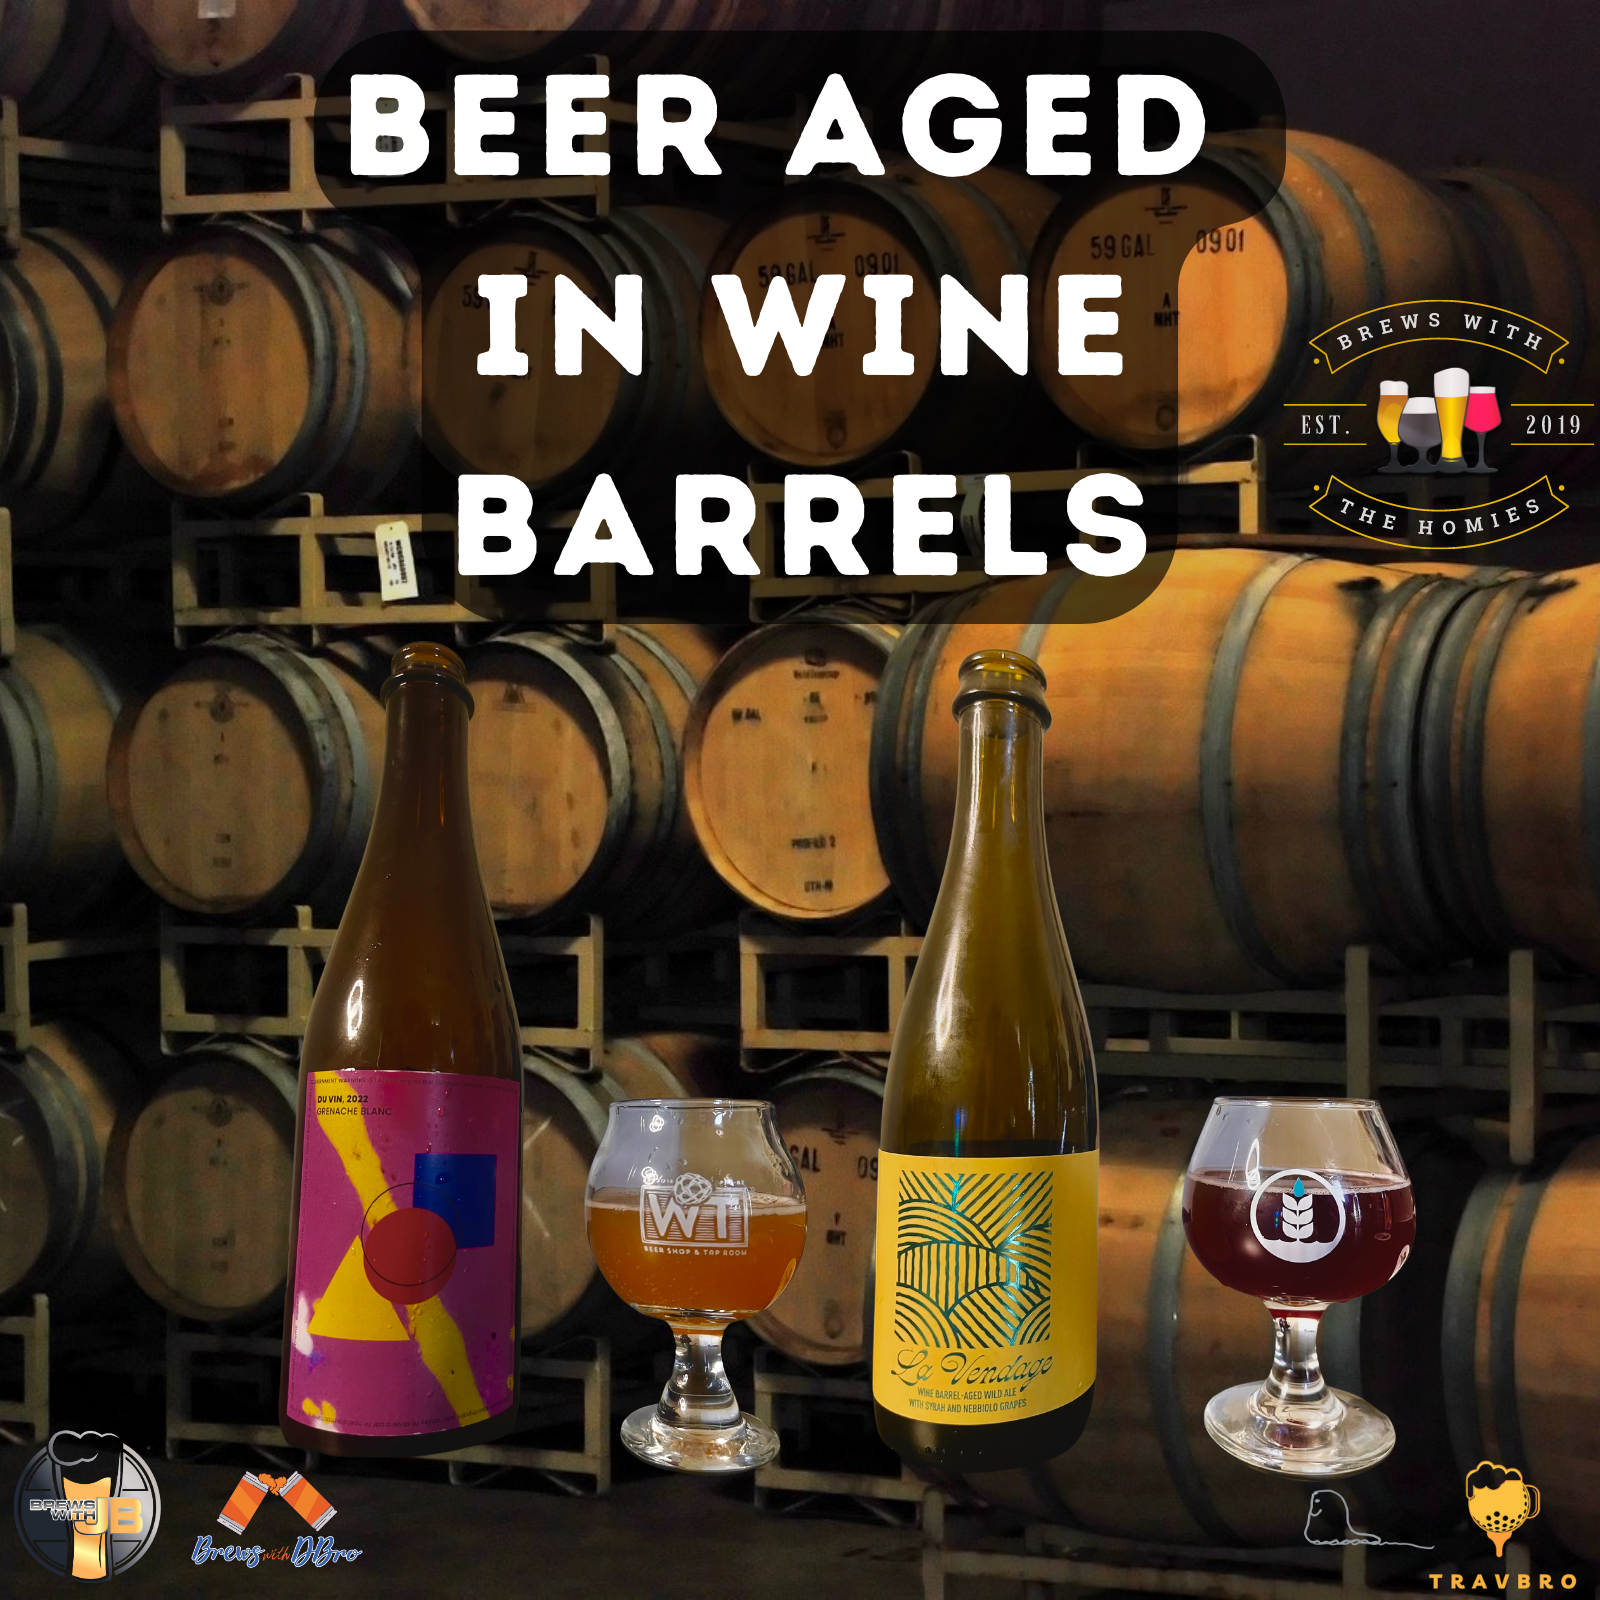 Beer aged in wine barrels